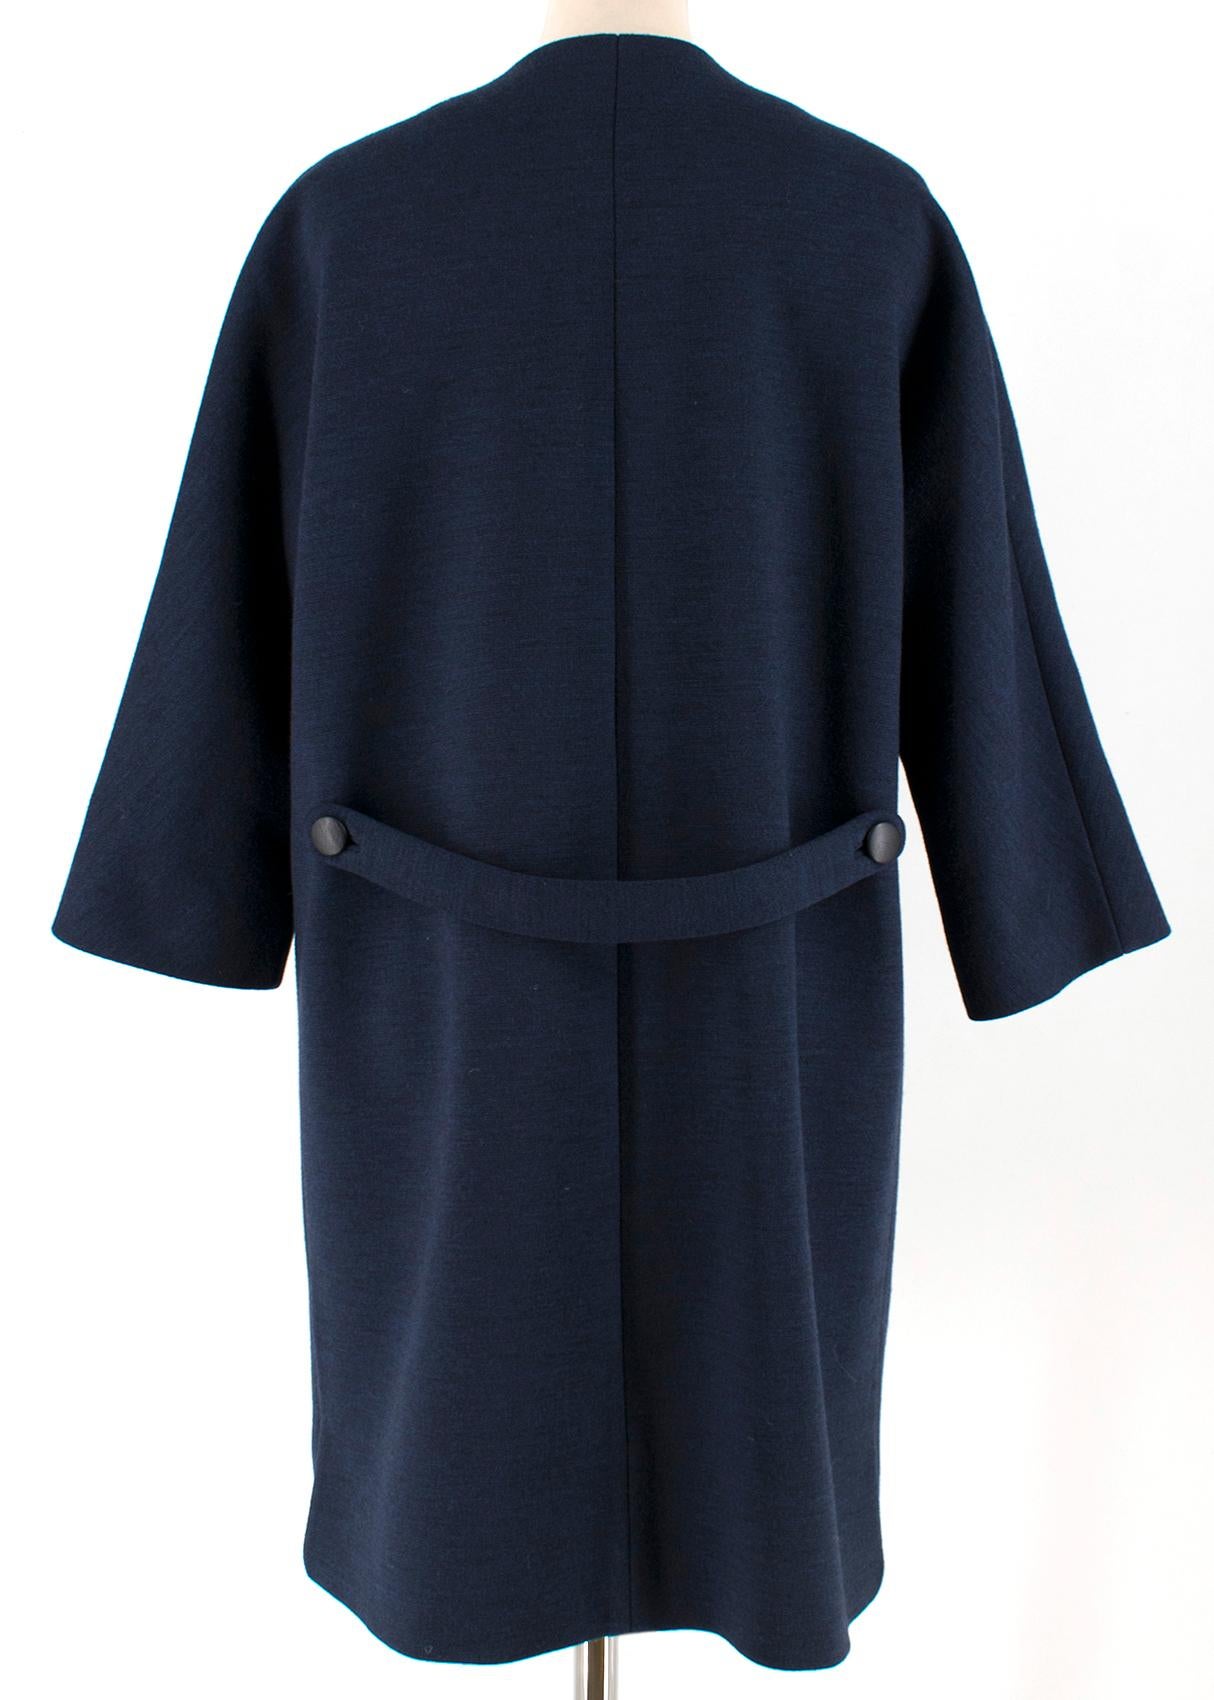 Black Balenciaga Navy Blue Wool Single-Breasted Coat 34 (FR)